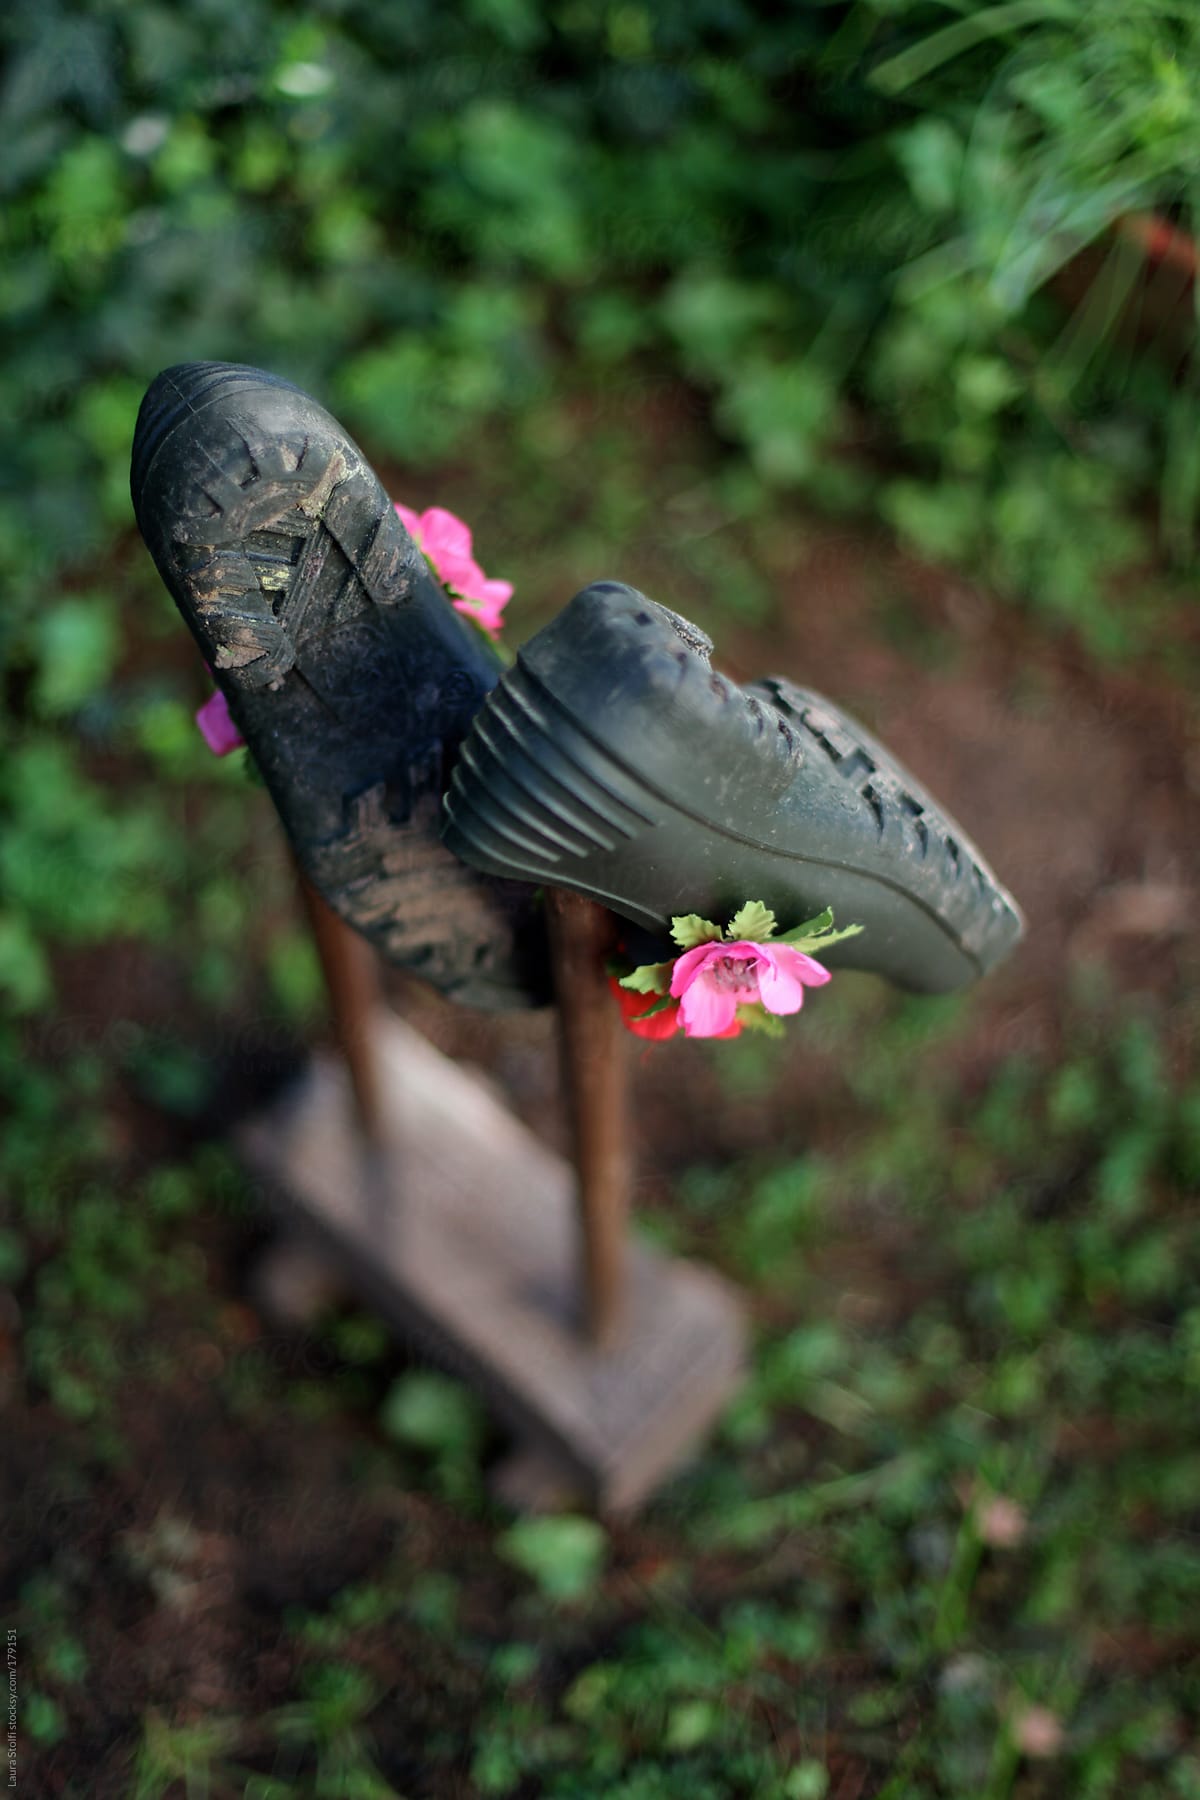 Overhead sight of flowered rubber garden shoes